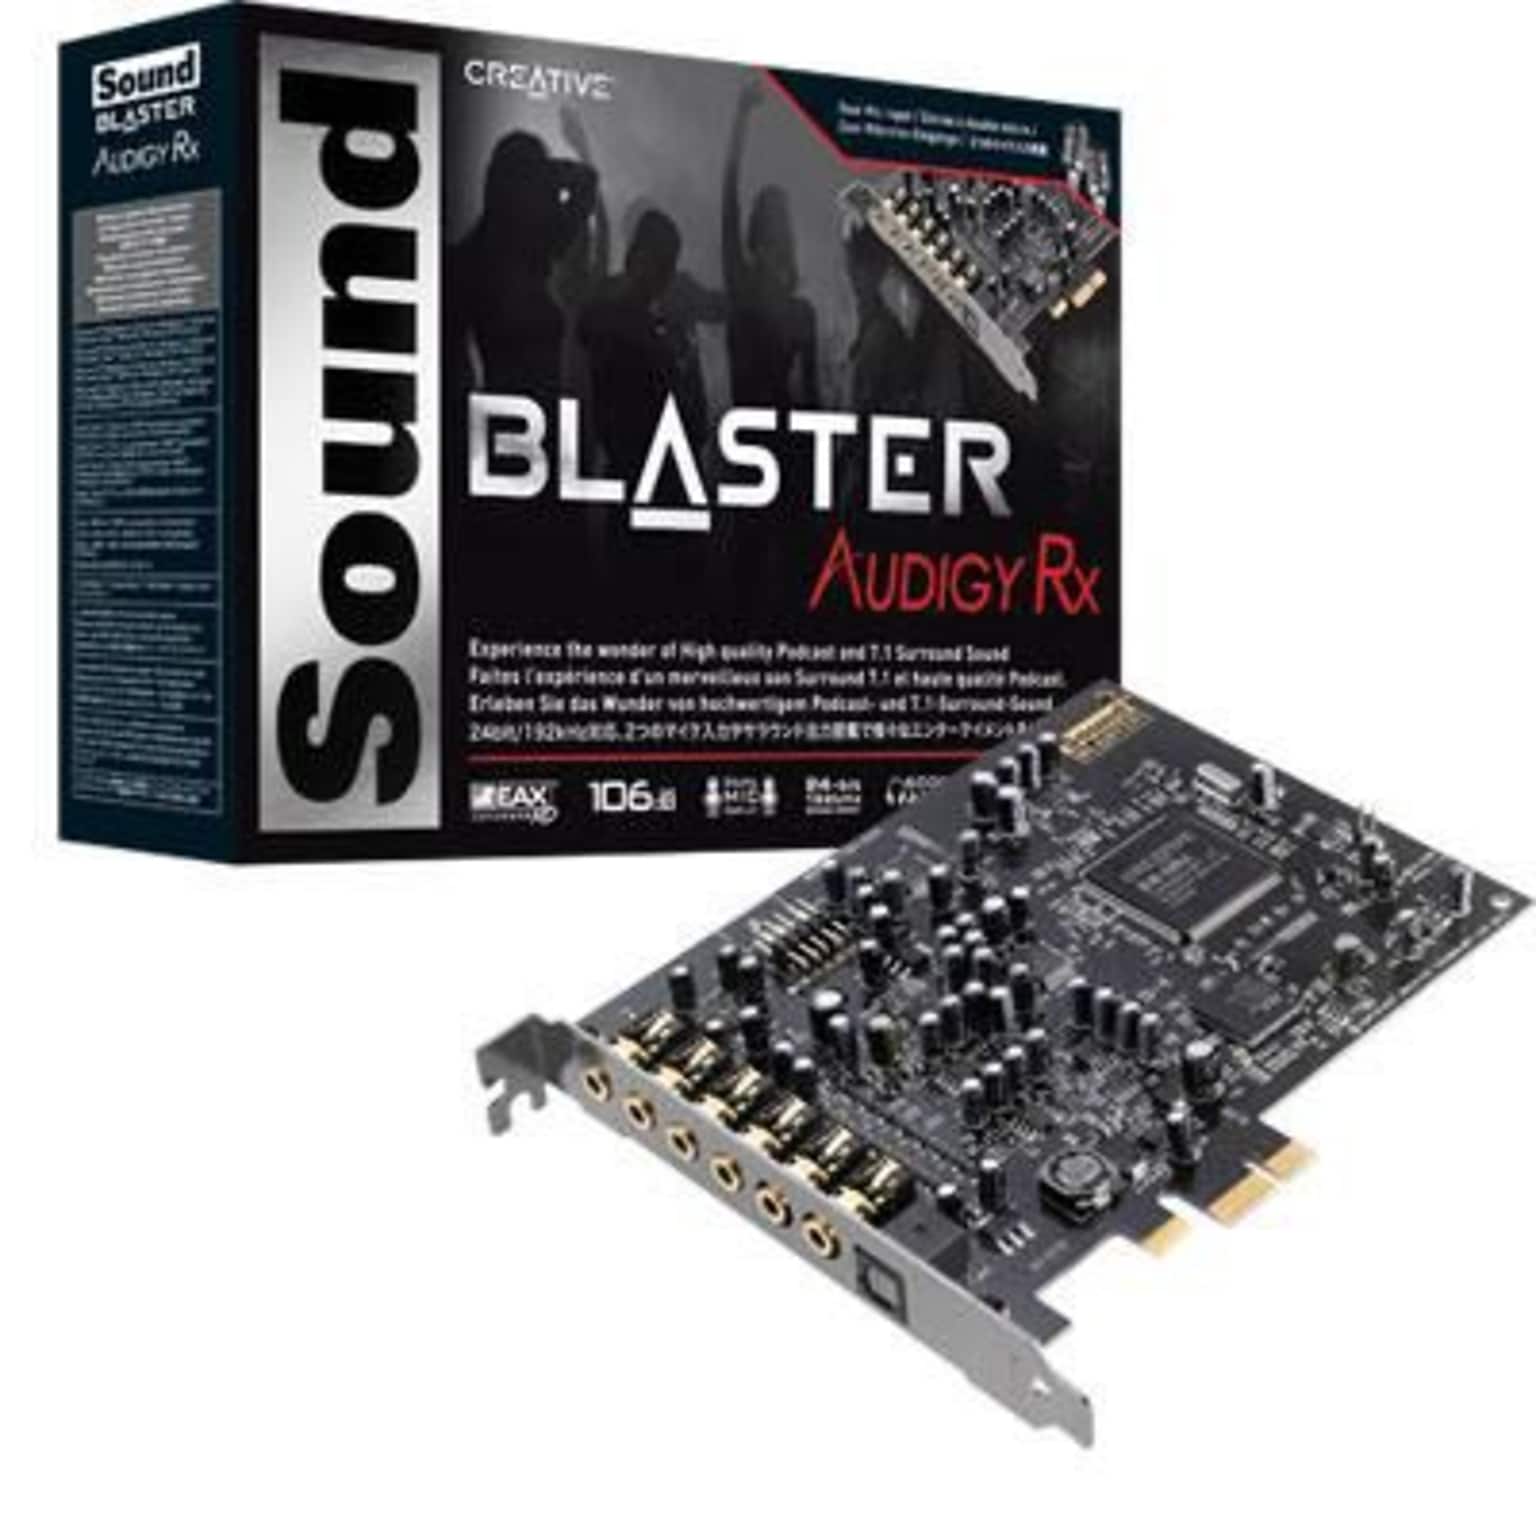 Sound Blaster 70SB155000001 Audigy RX PCI Express x1 Sound Card | Quill.com